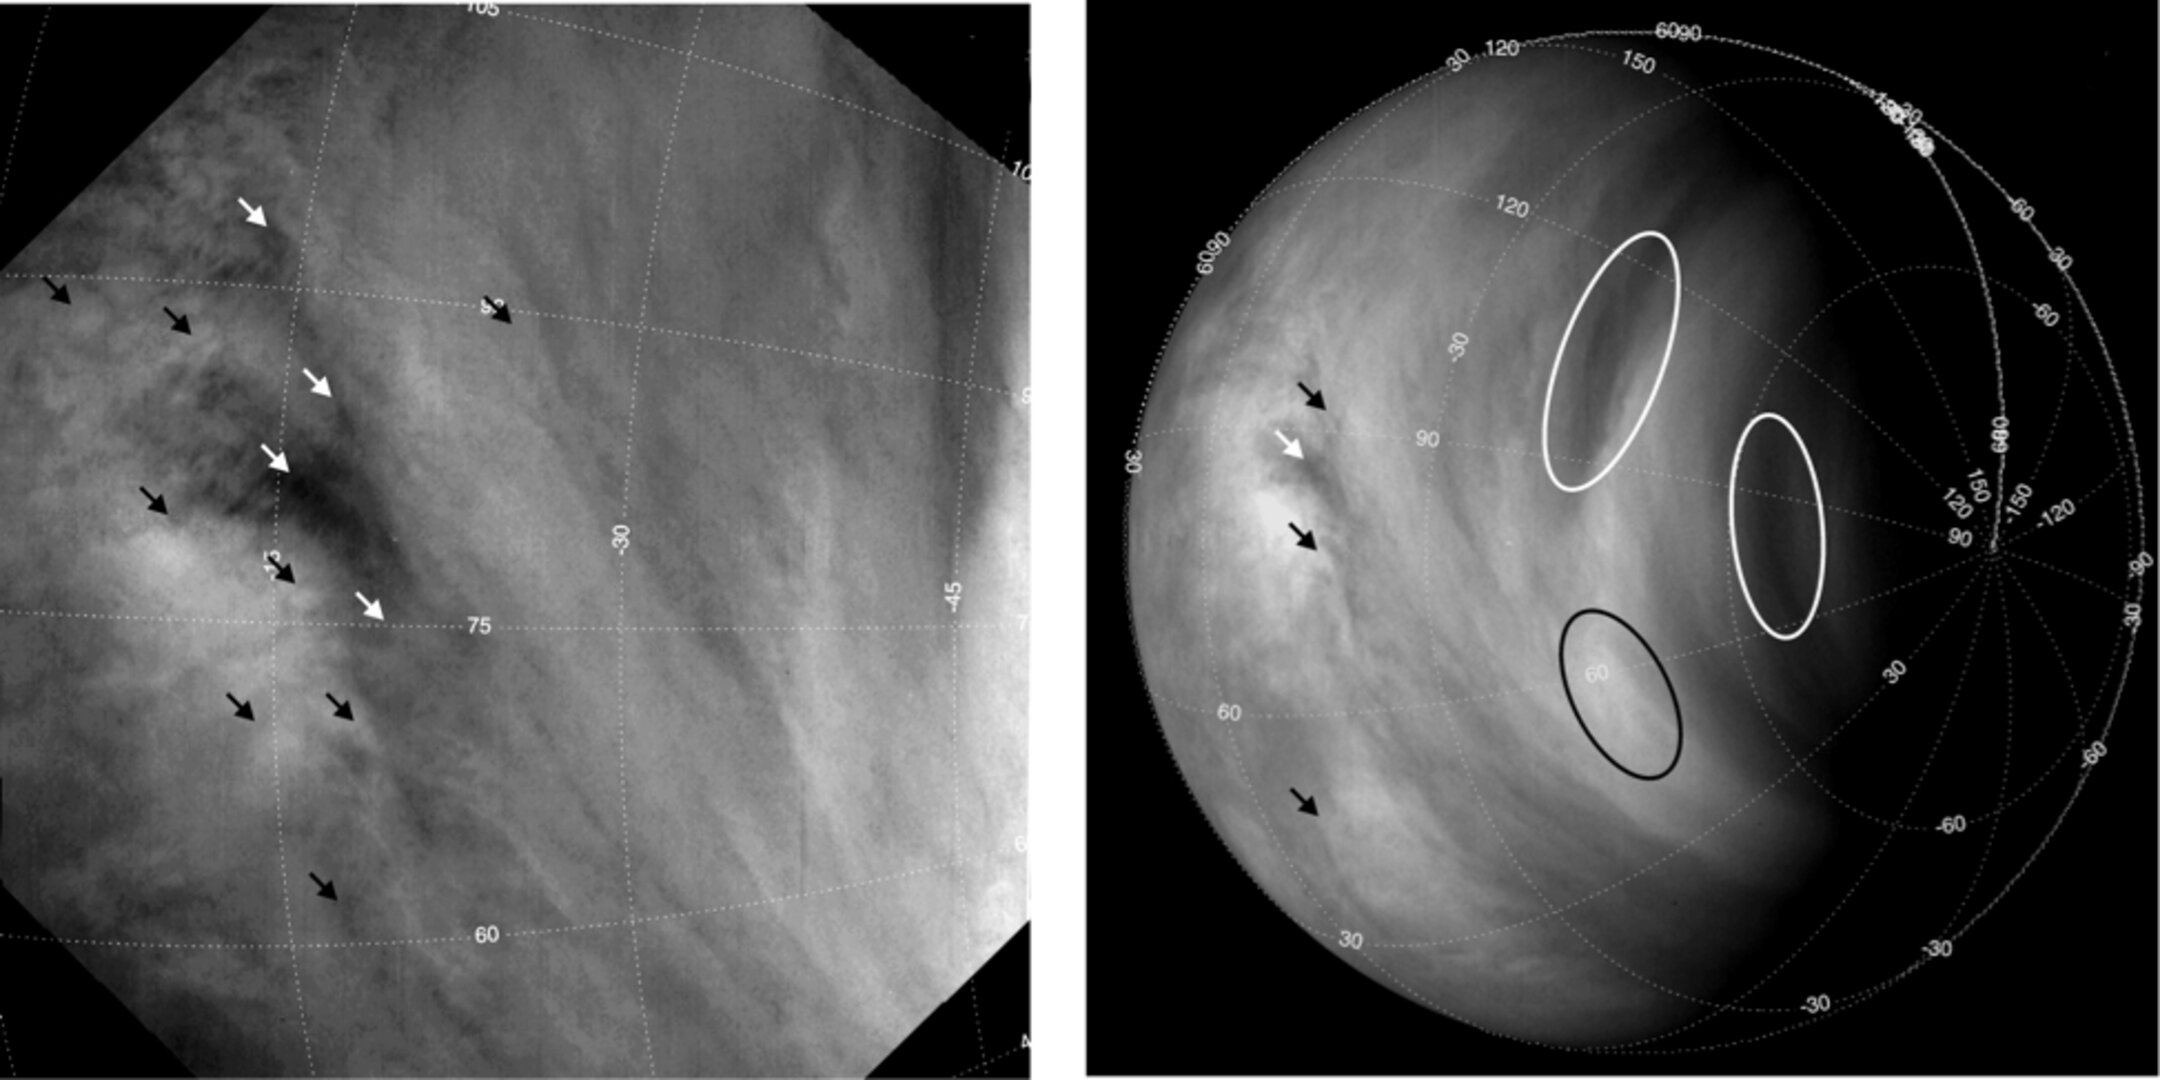 Tracking clouds on Venus